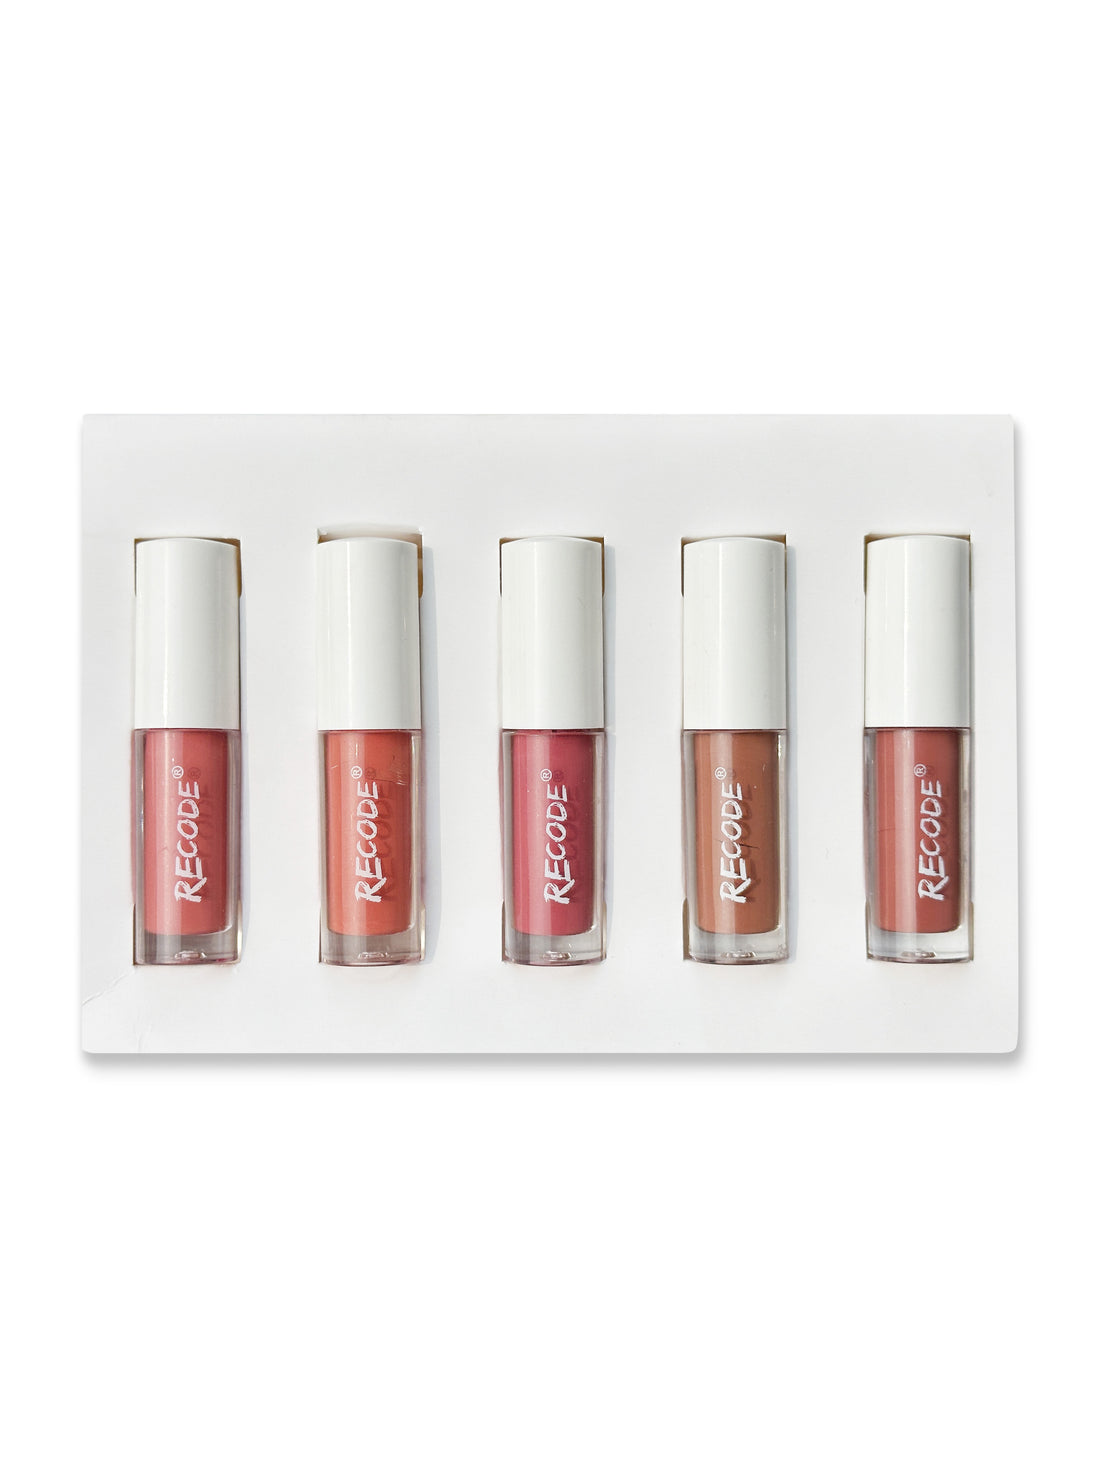 Recode Mini Mousse Lipsticks - Nudes - 5 x 1.75 ml - 8.75 ml